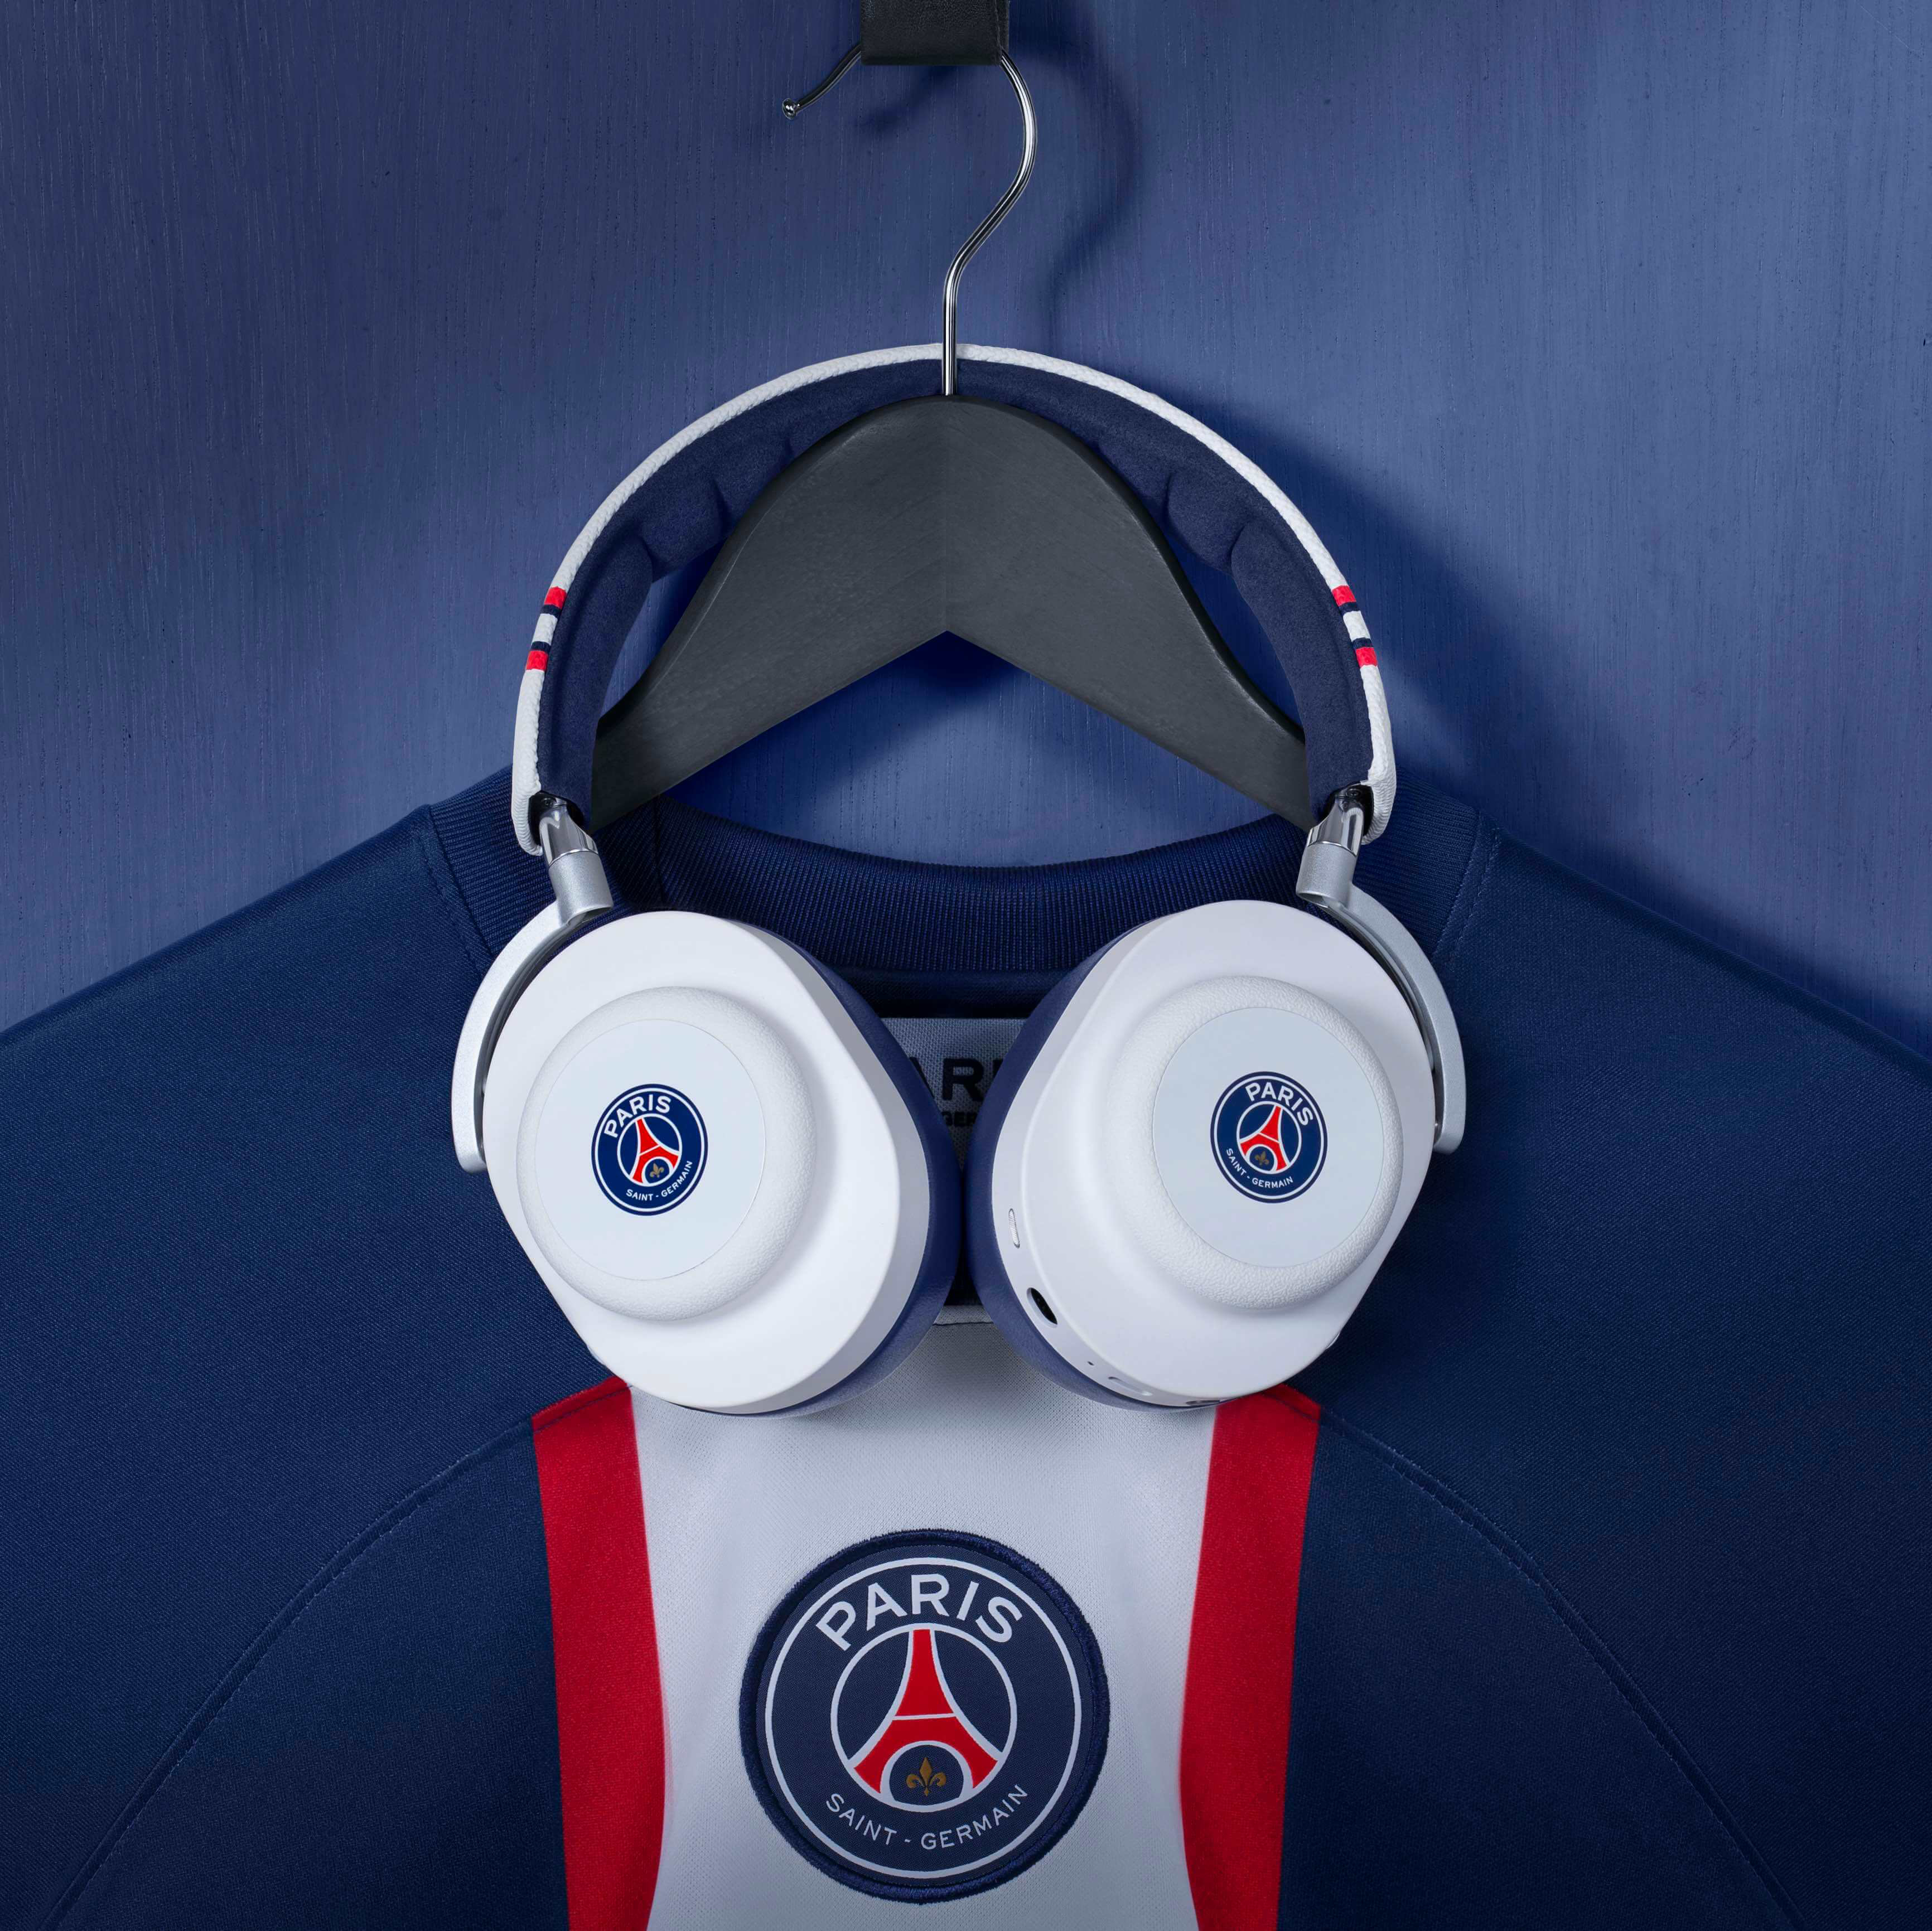 The MG20 Wireless Gaming Headphones for Paris Saint-Germain